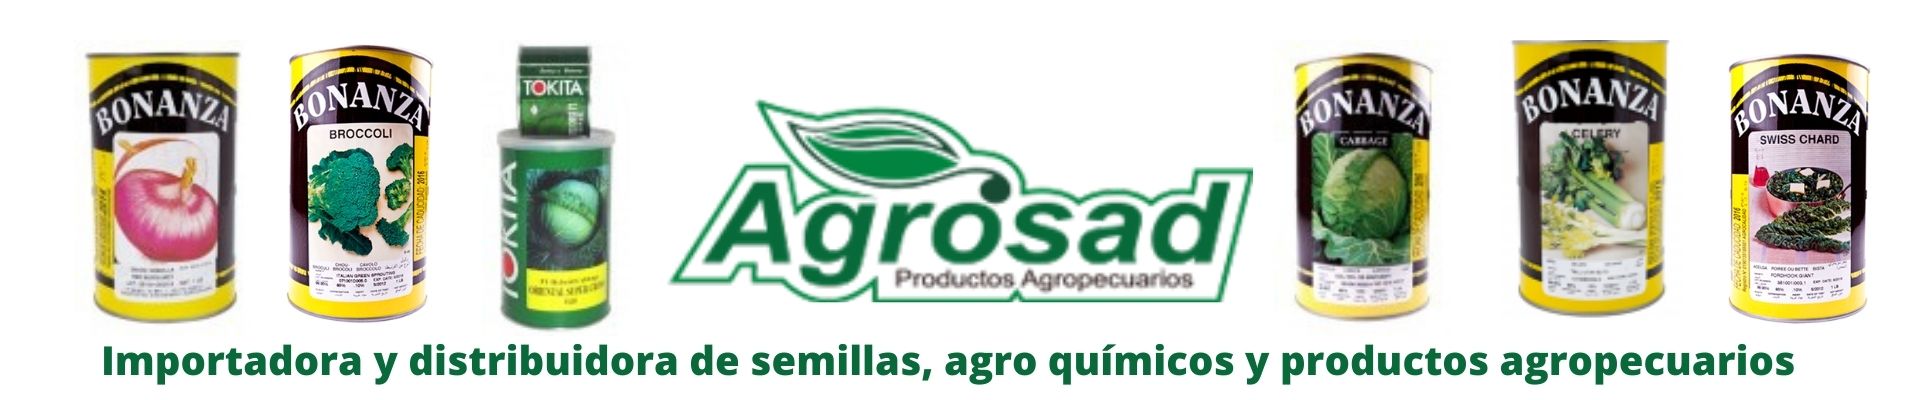 Banner Agrosad